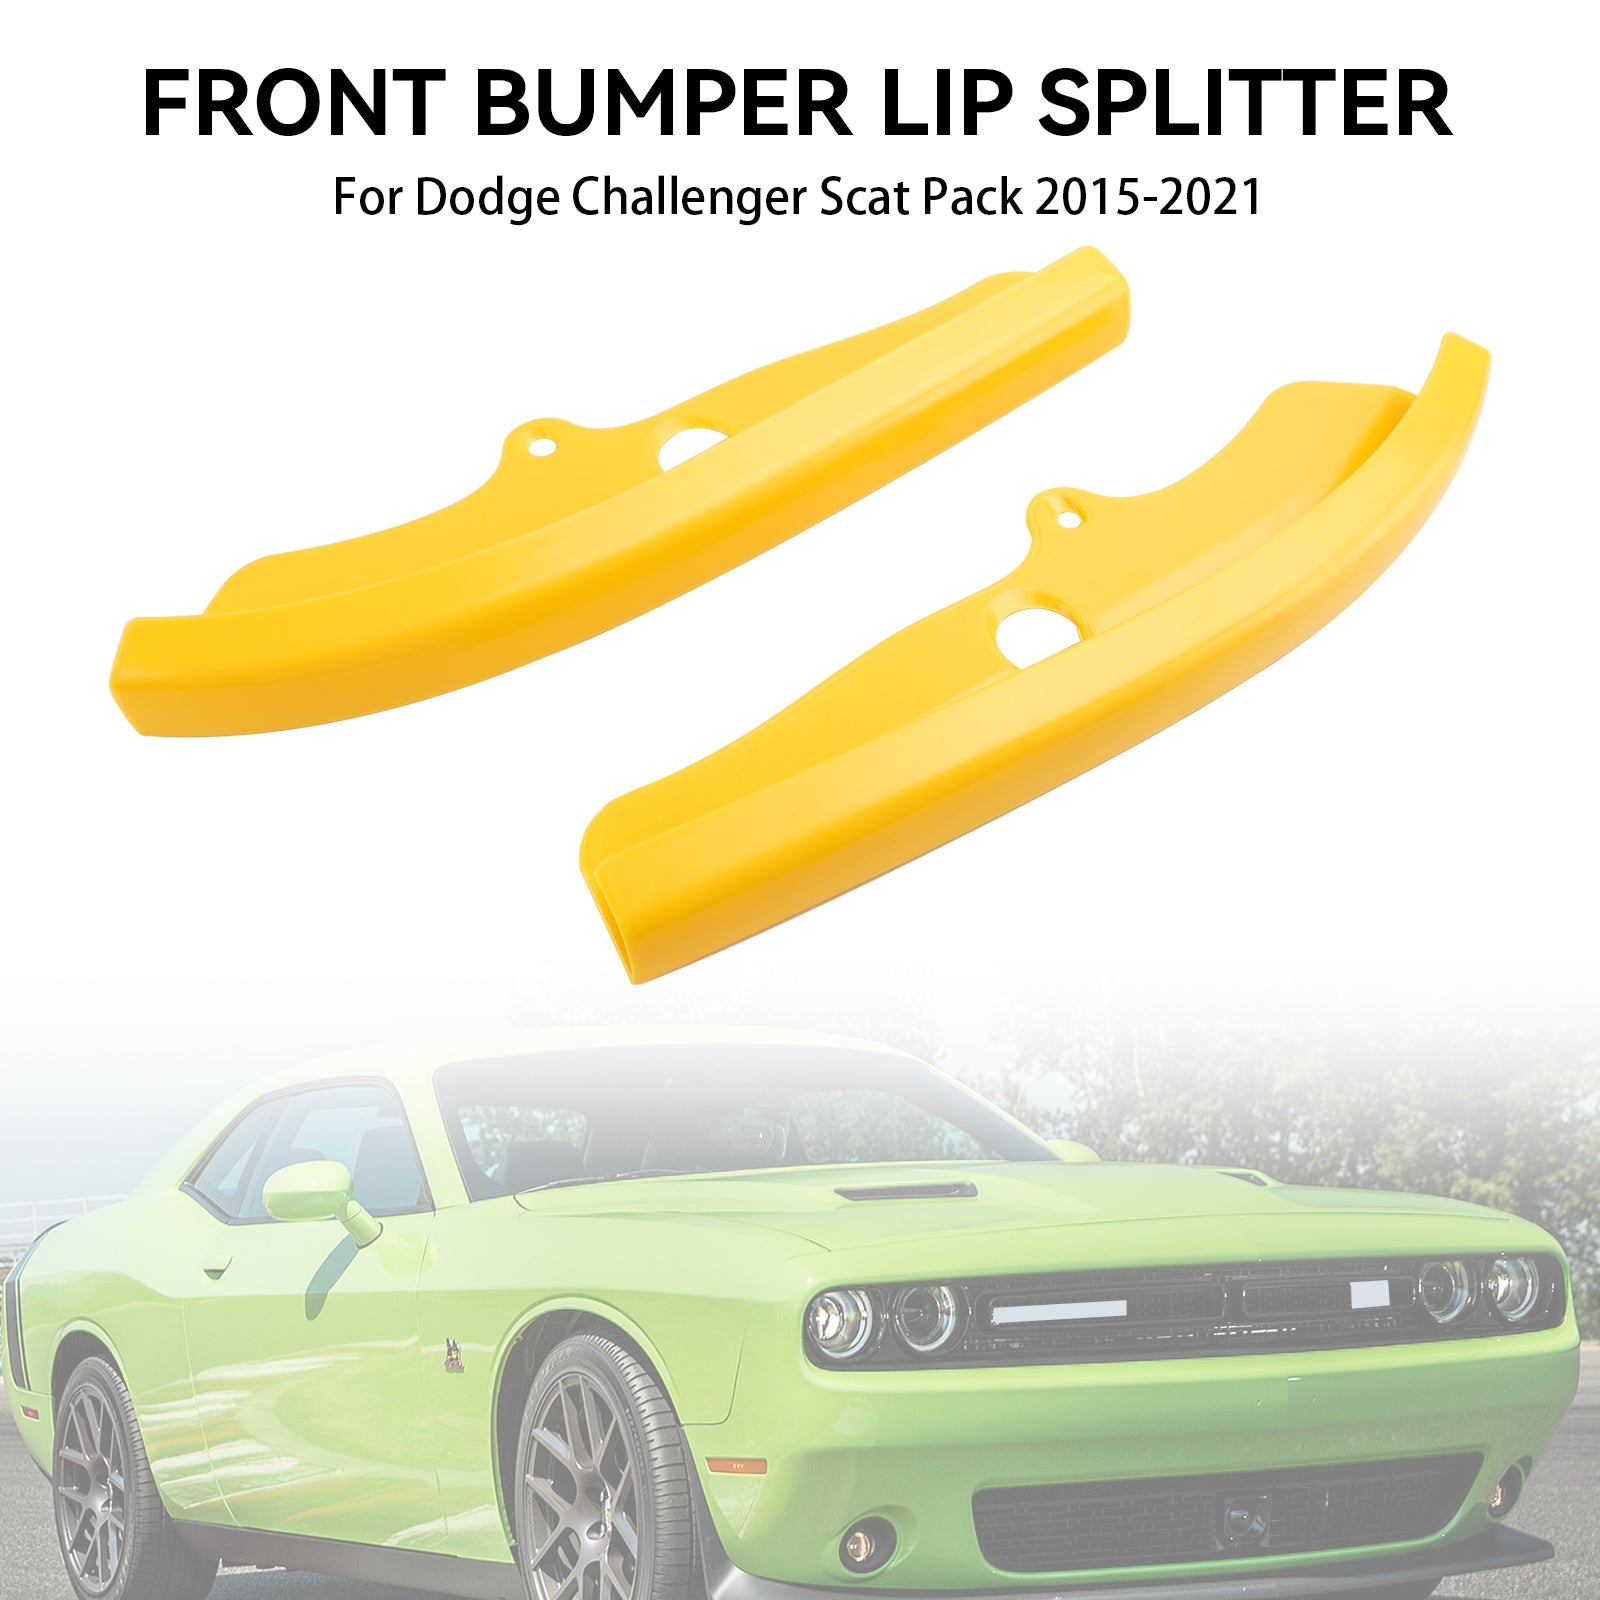 Protector divisor de labios para parachoques delantero Dodge Challenger Scat Pack 2015-2021